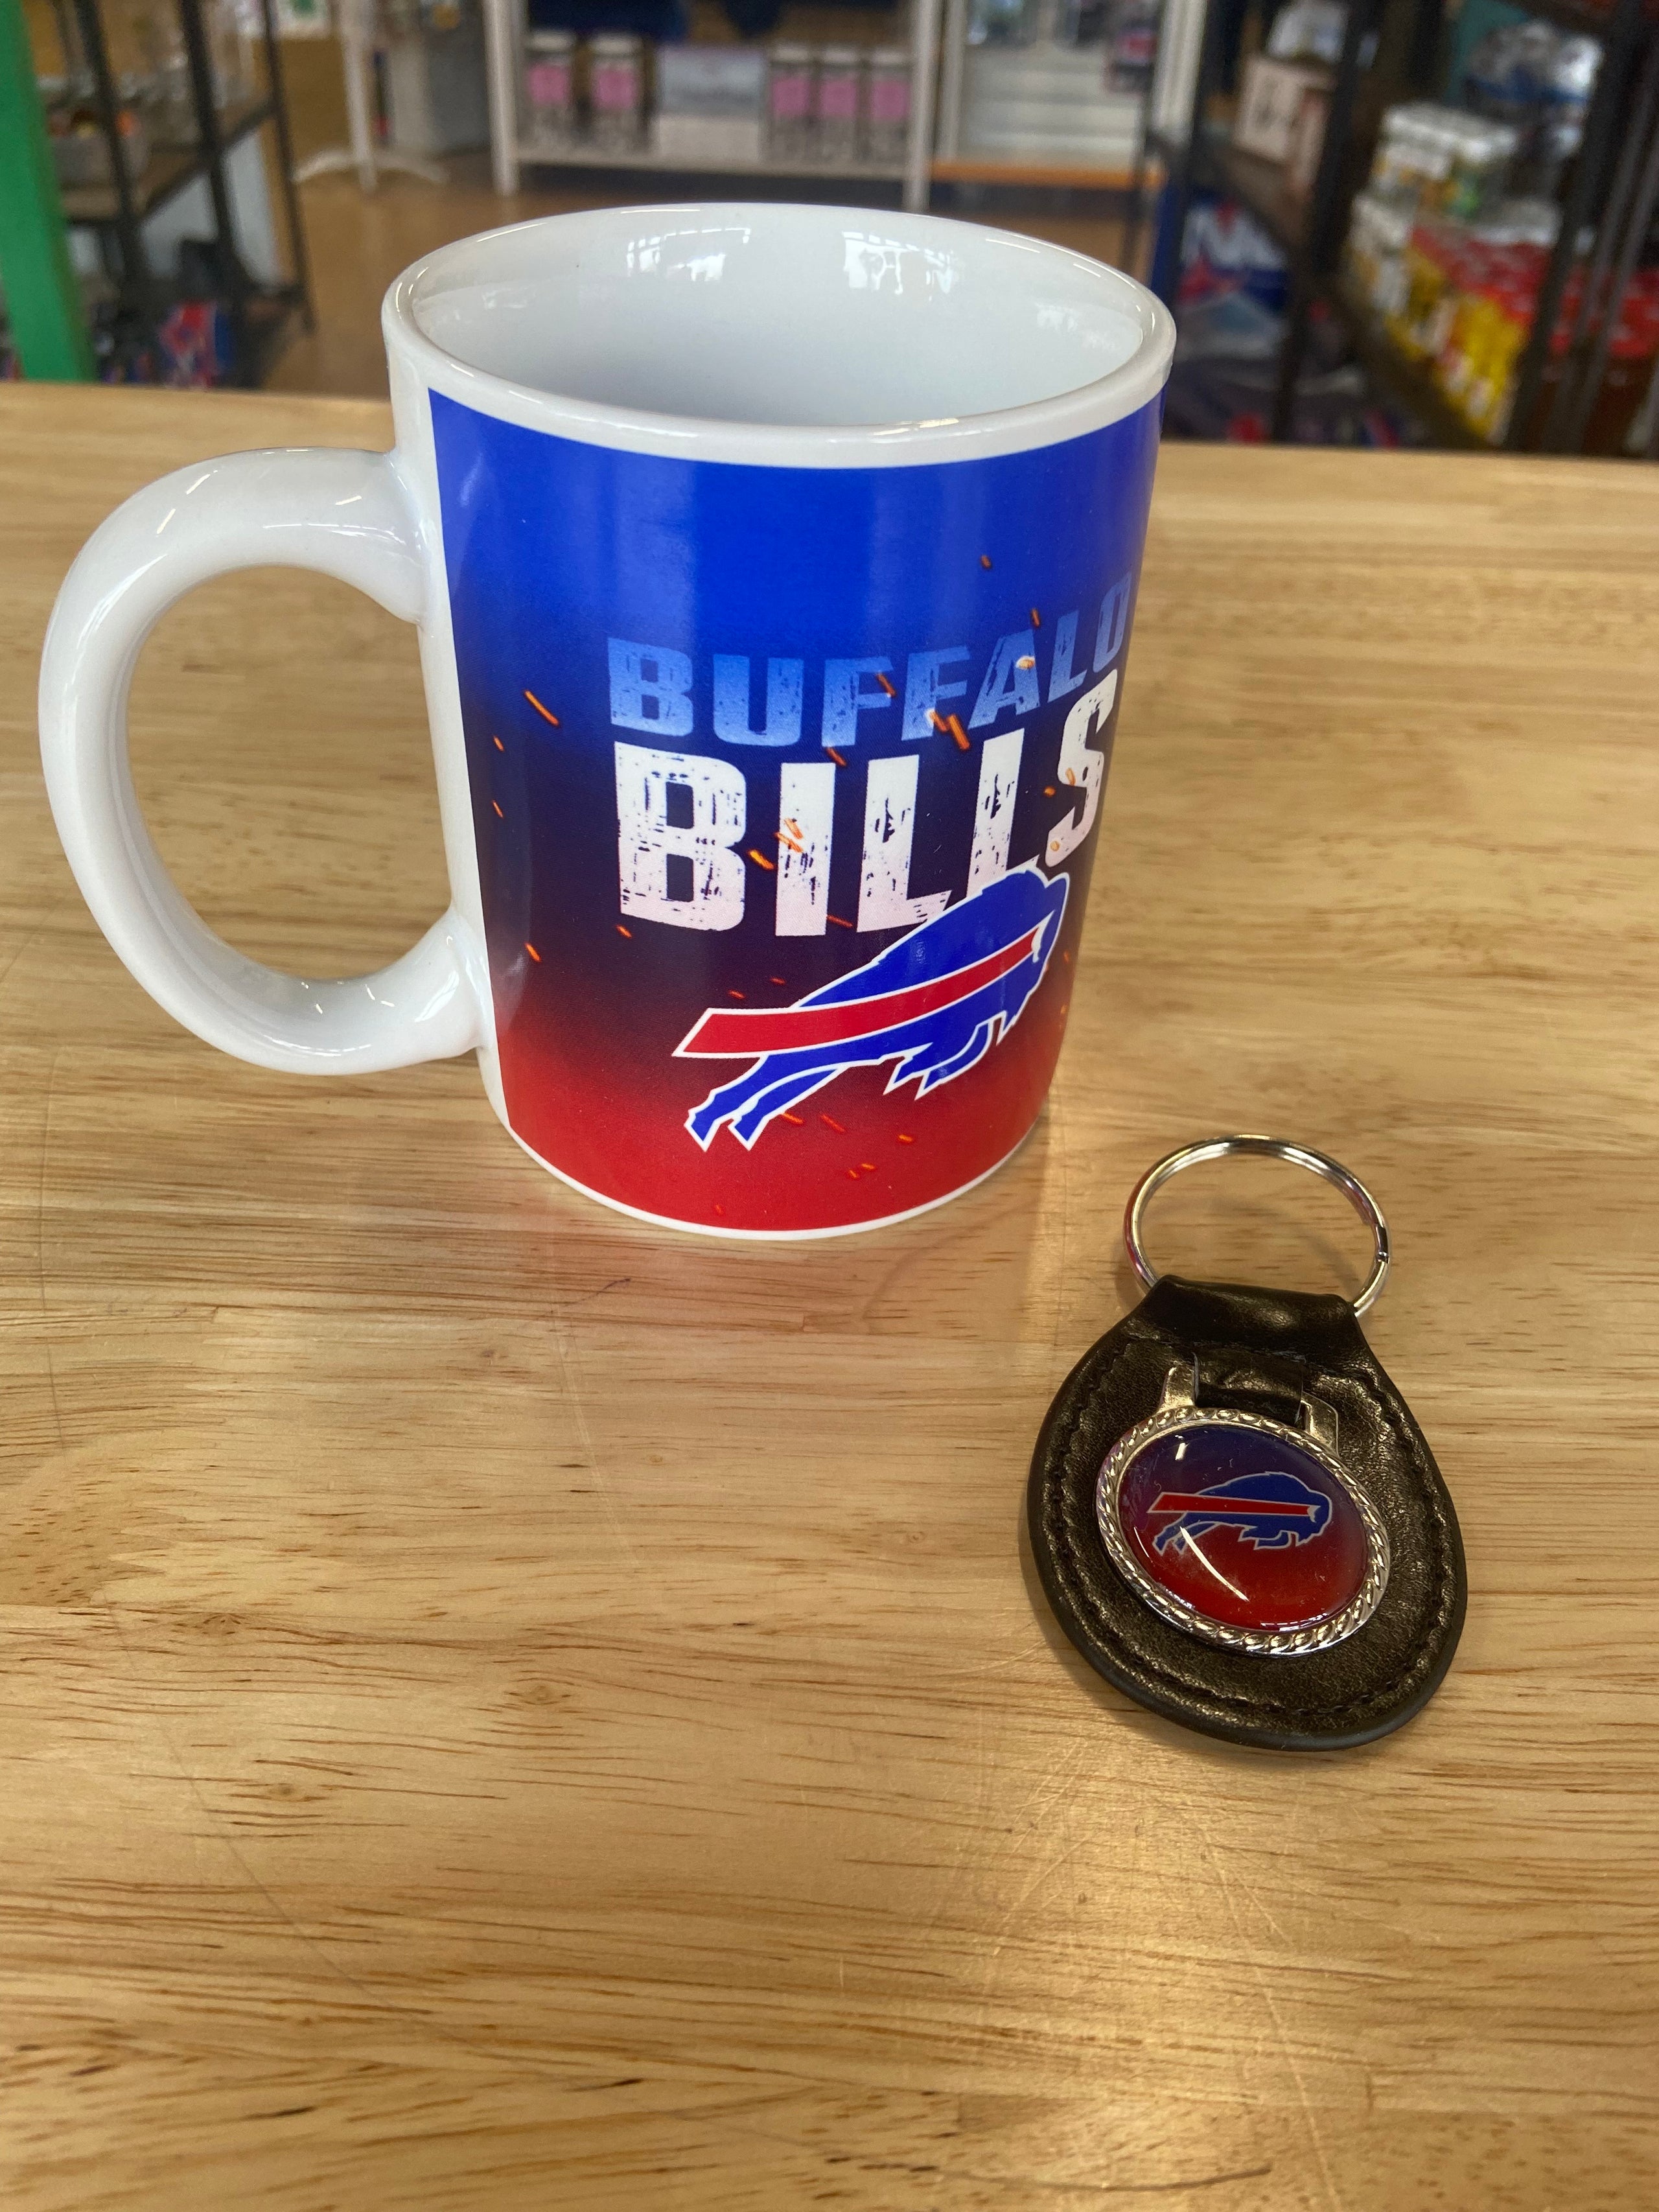 NFL Buffalo Bills Helmet Keychain – Buffalo Seamery